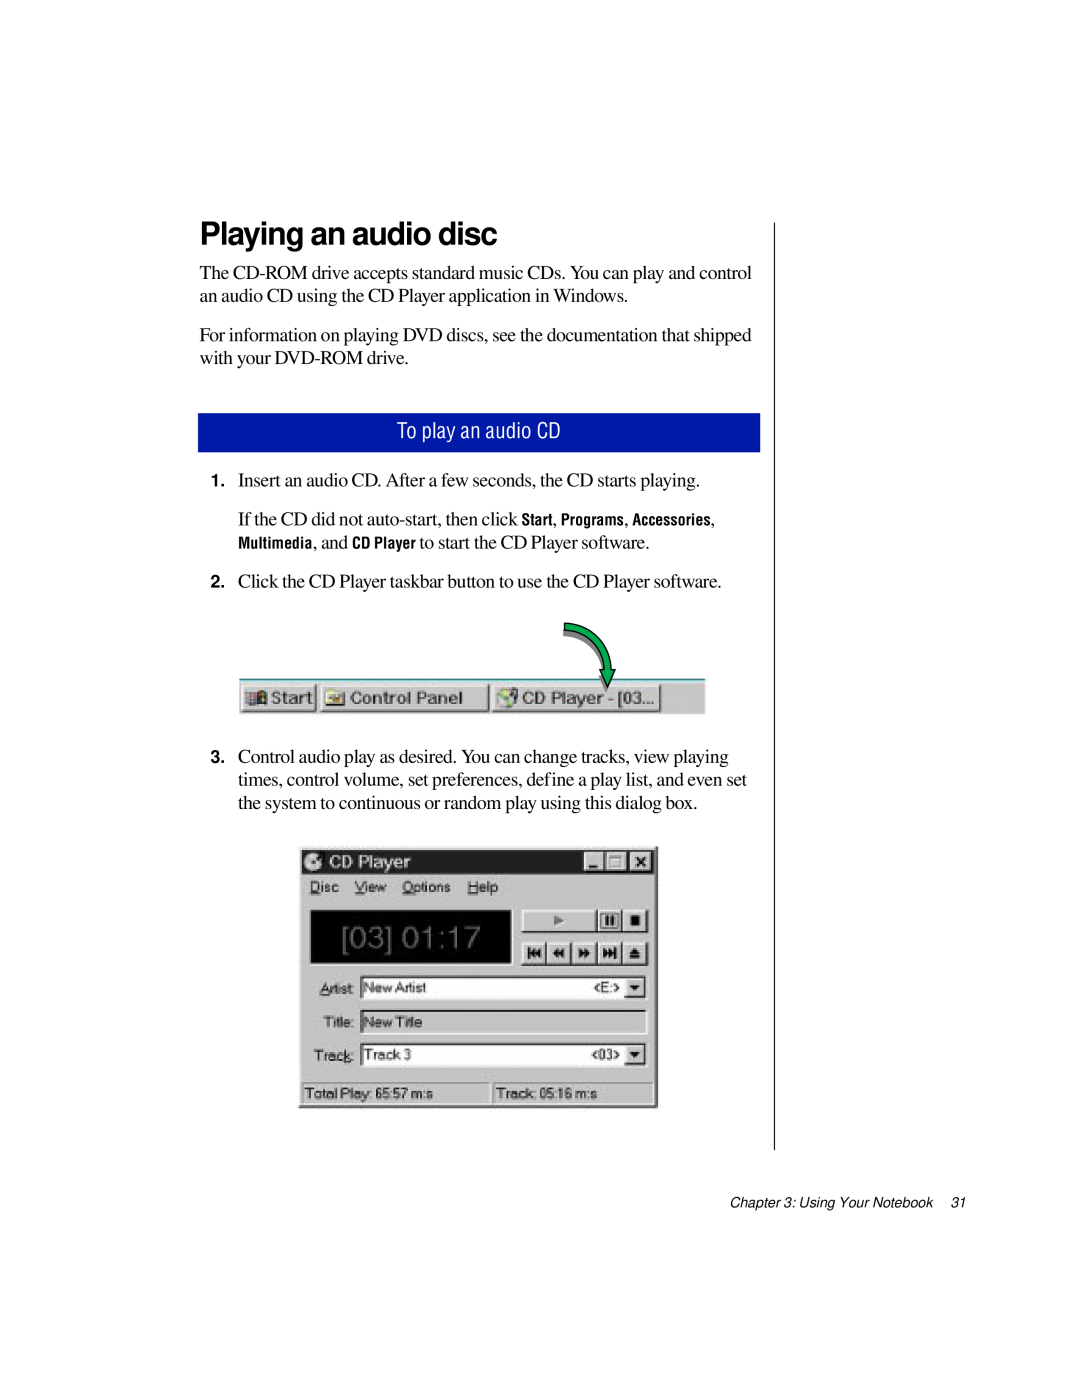 Gateway TM 5150 manual To play an audio CD, Playing an audio disc 